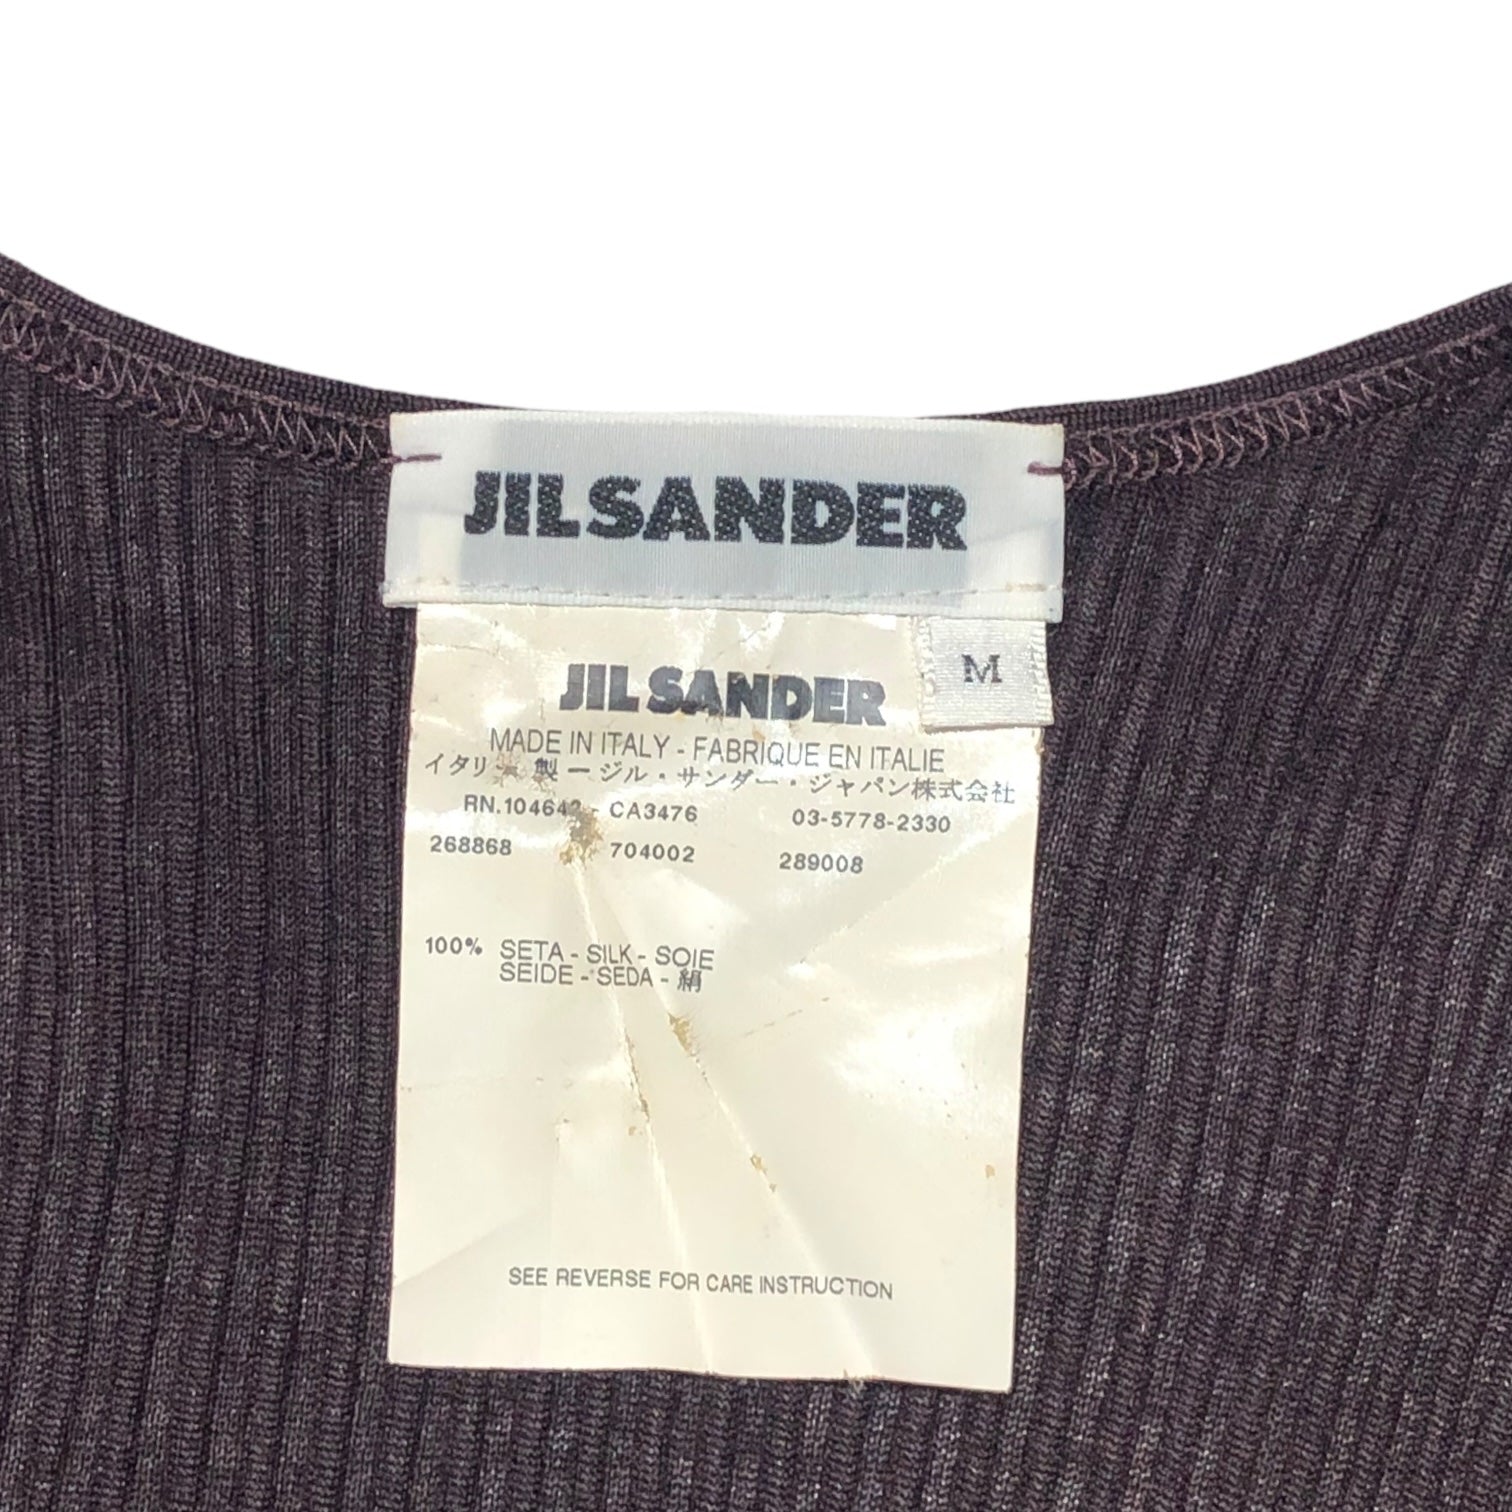 JIL SANDER(ジルサンダー) silk lib S/S cut and sew 総シルク リブ カットソー  M ブラウン トップス